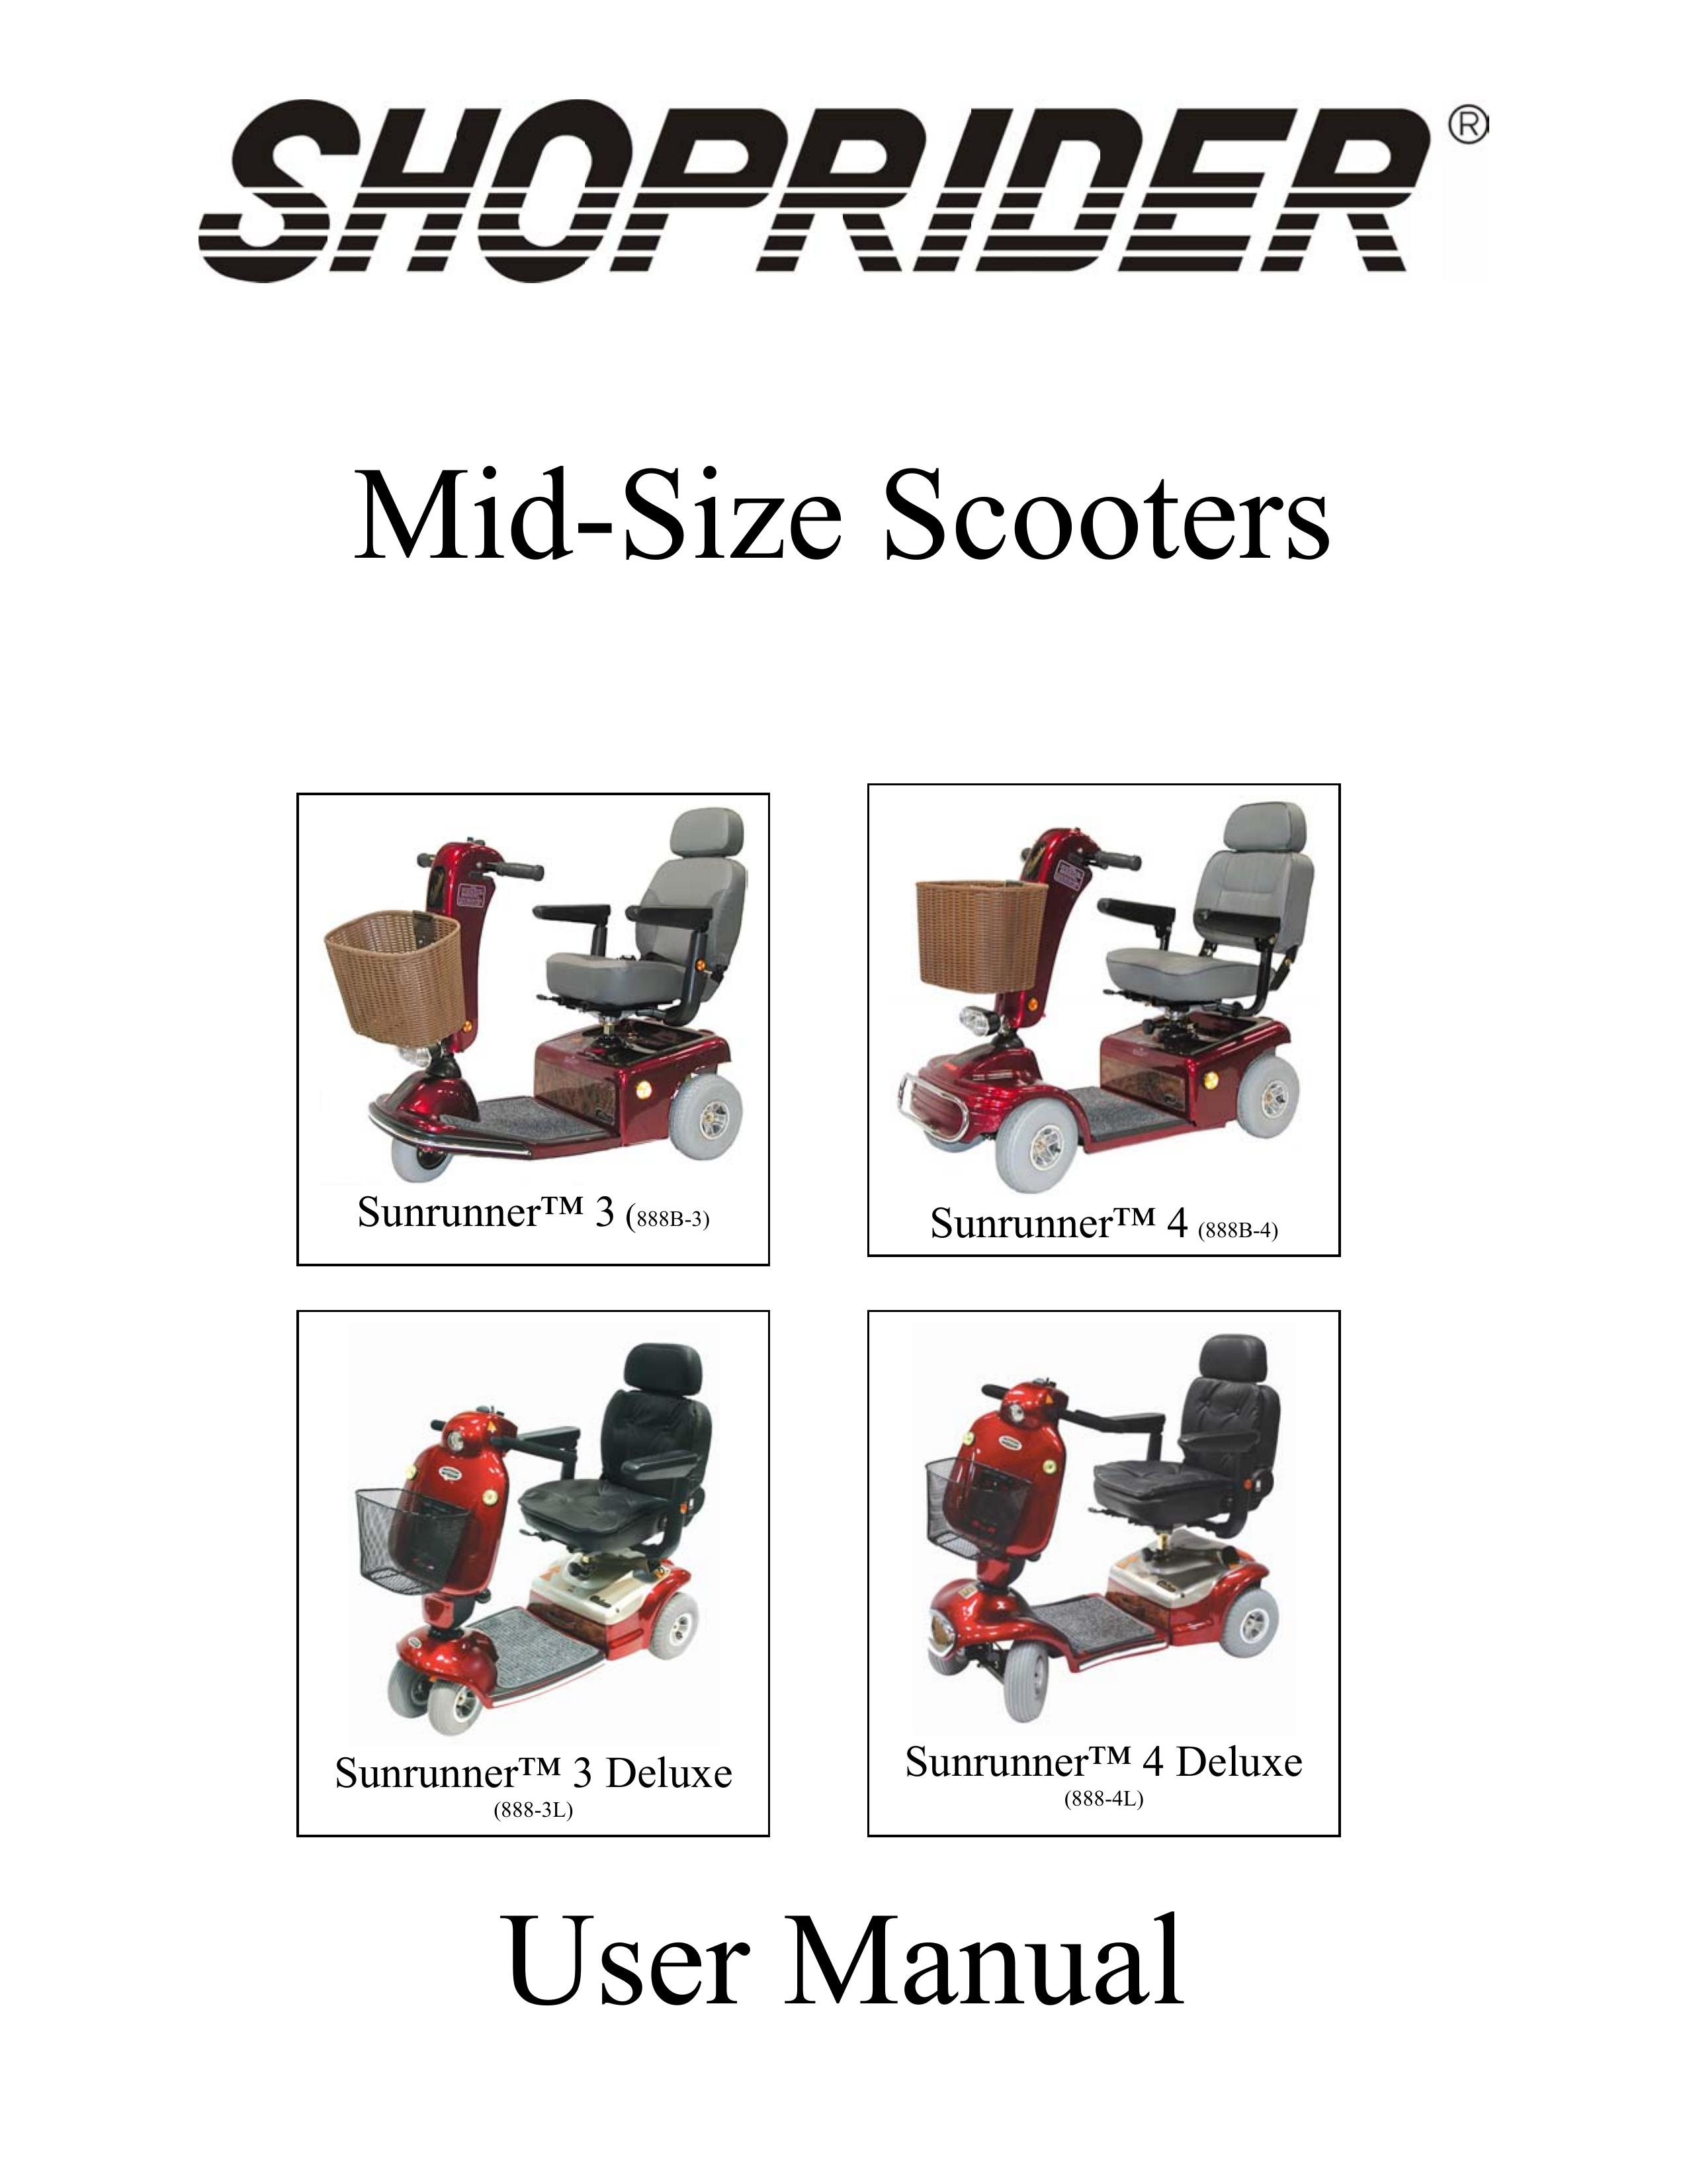 Shoprider (888-4L) Mobility Aid User Manual